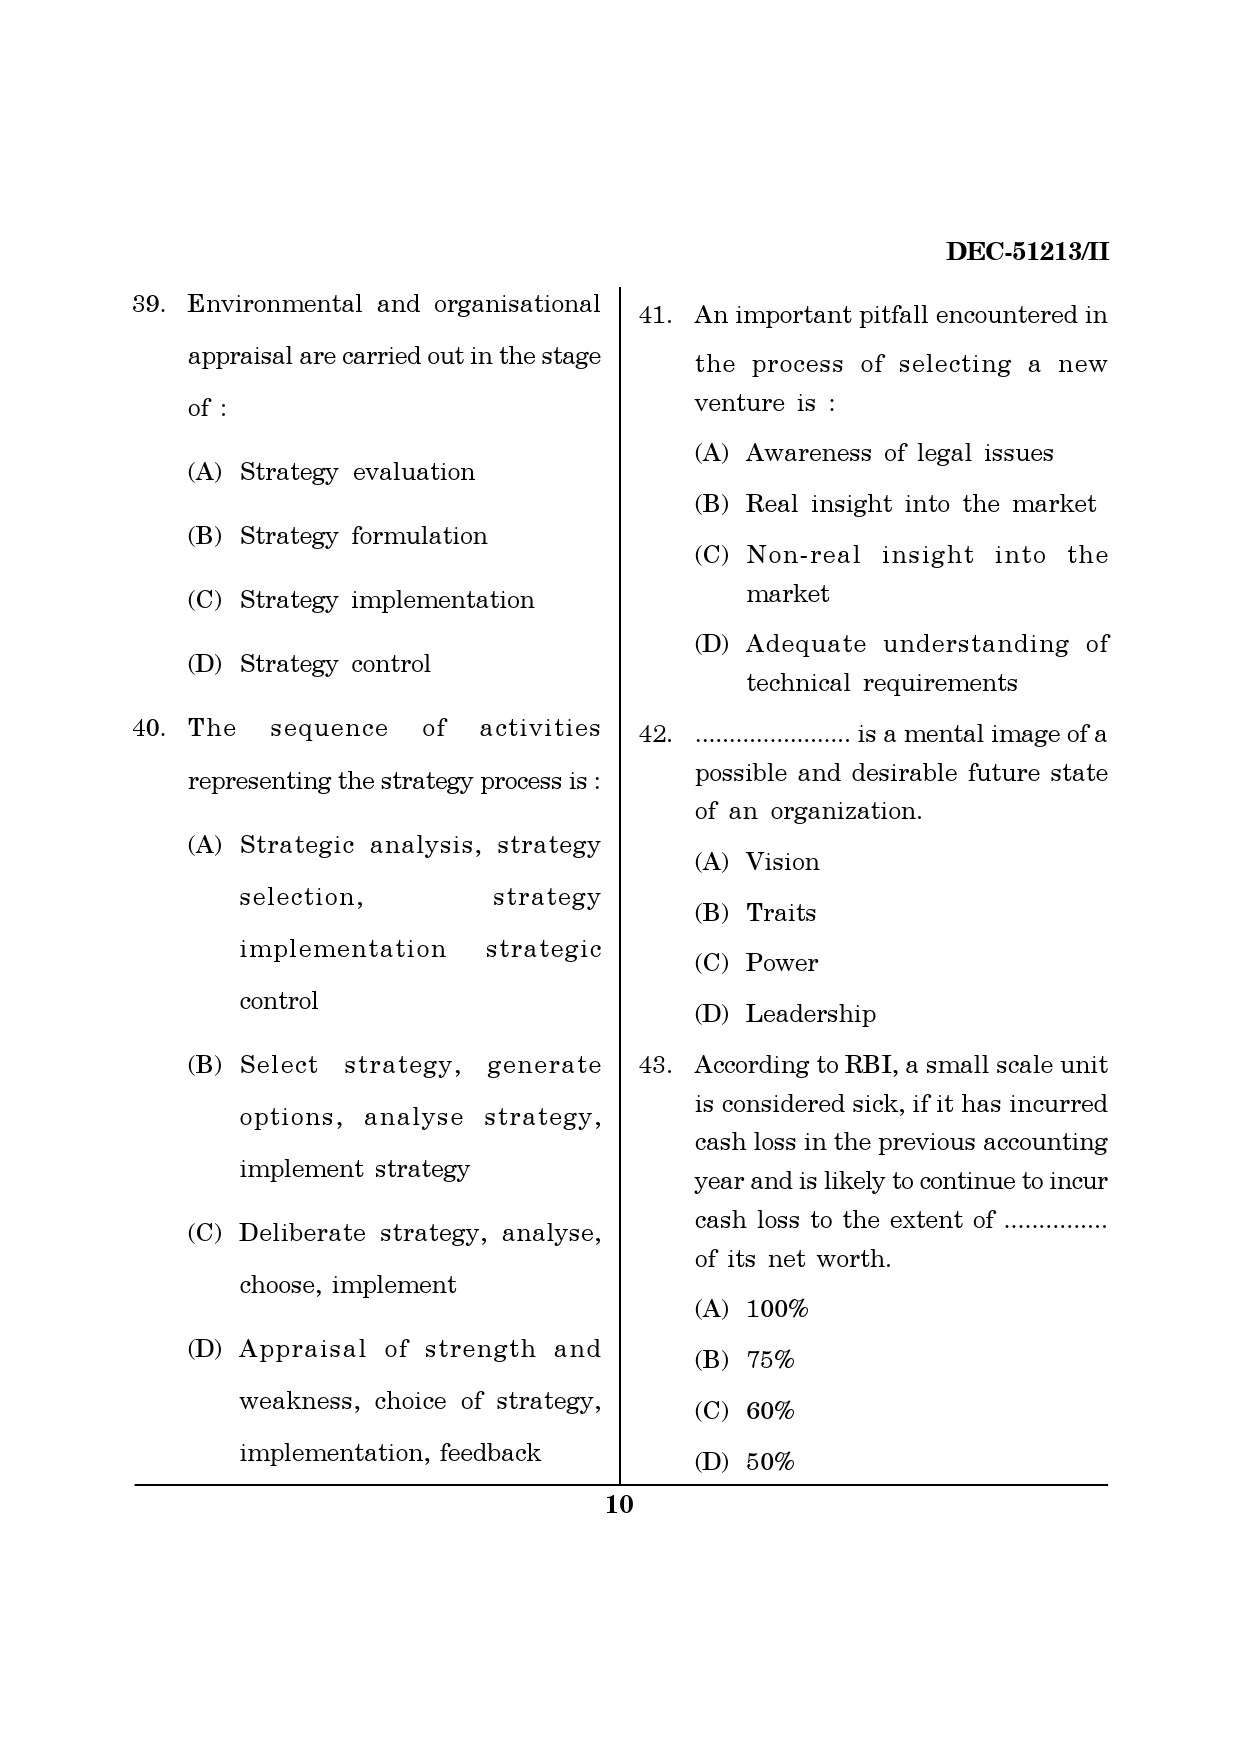 Maharashtra SET Management Question Paper II December 2013 9